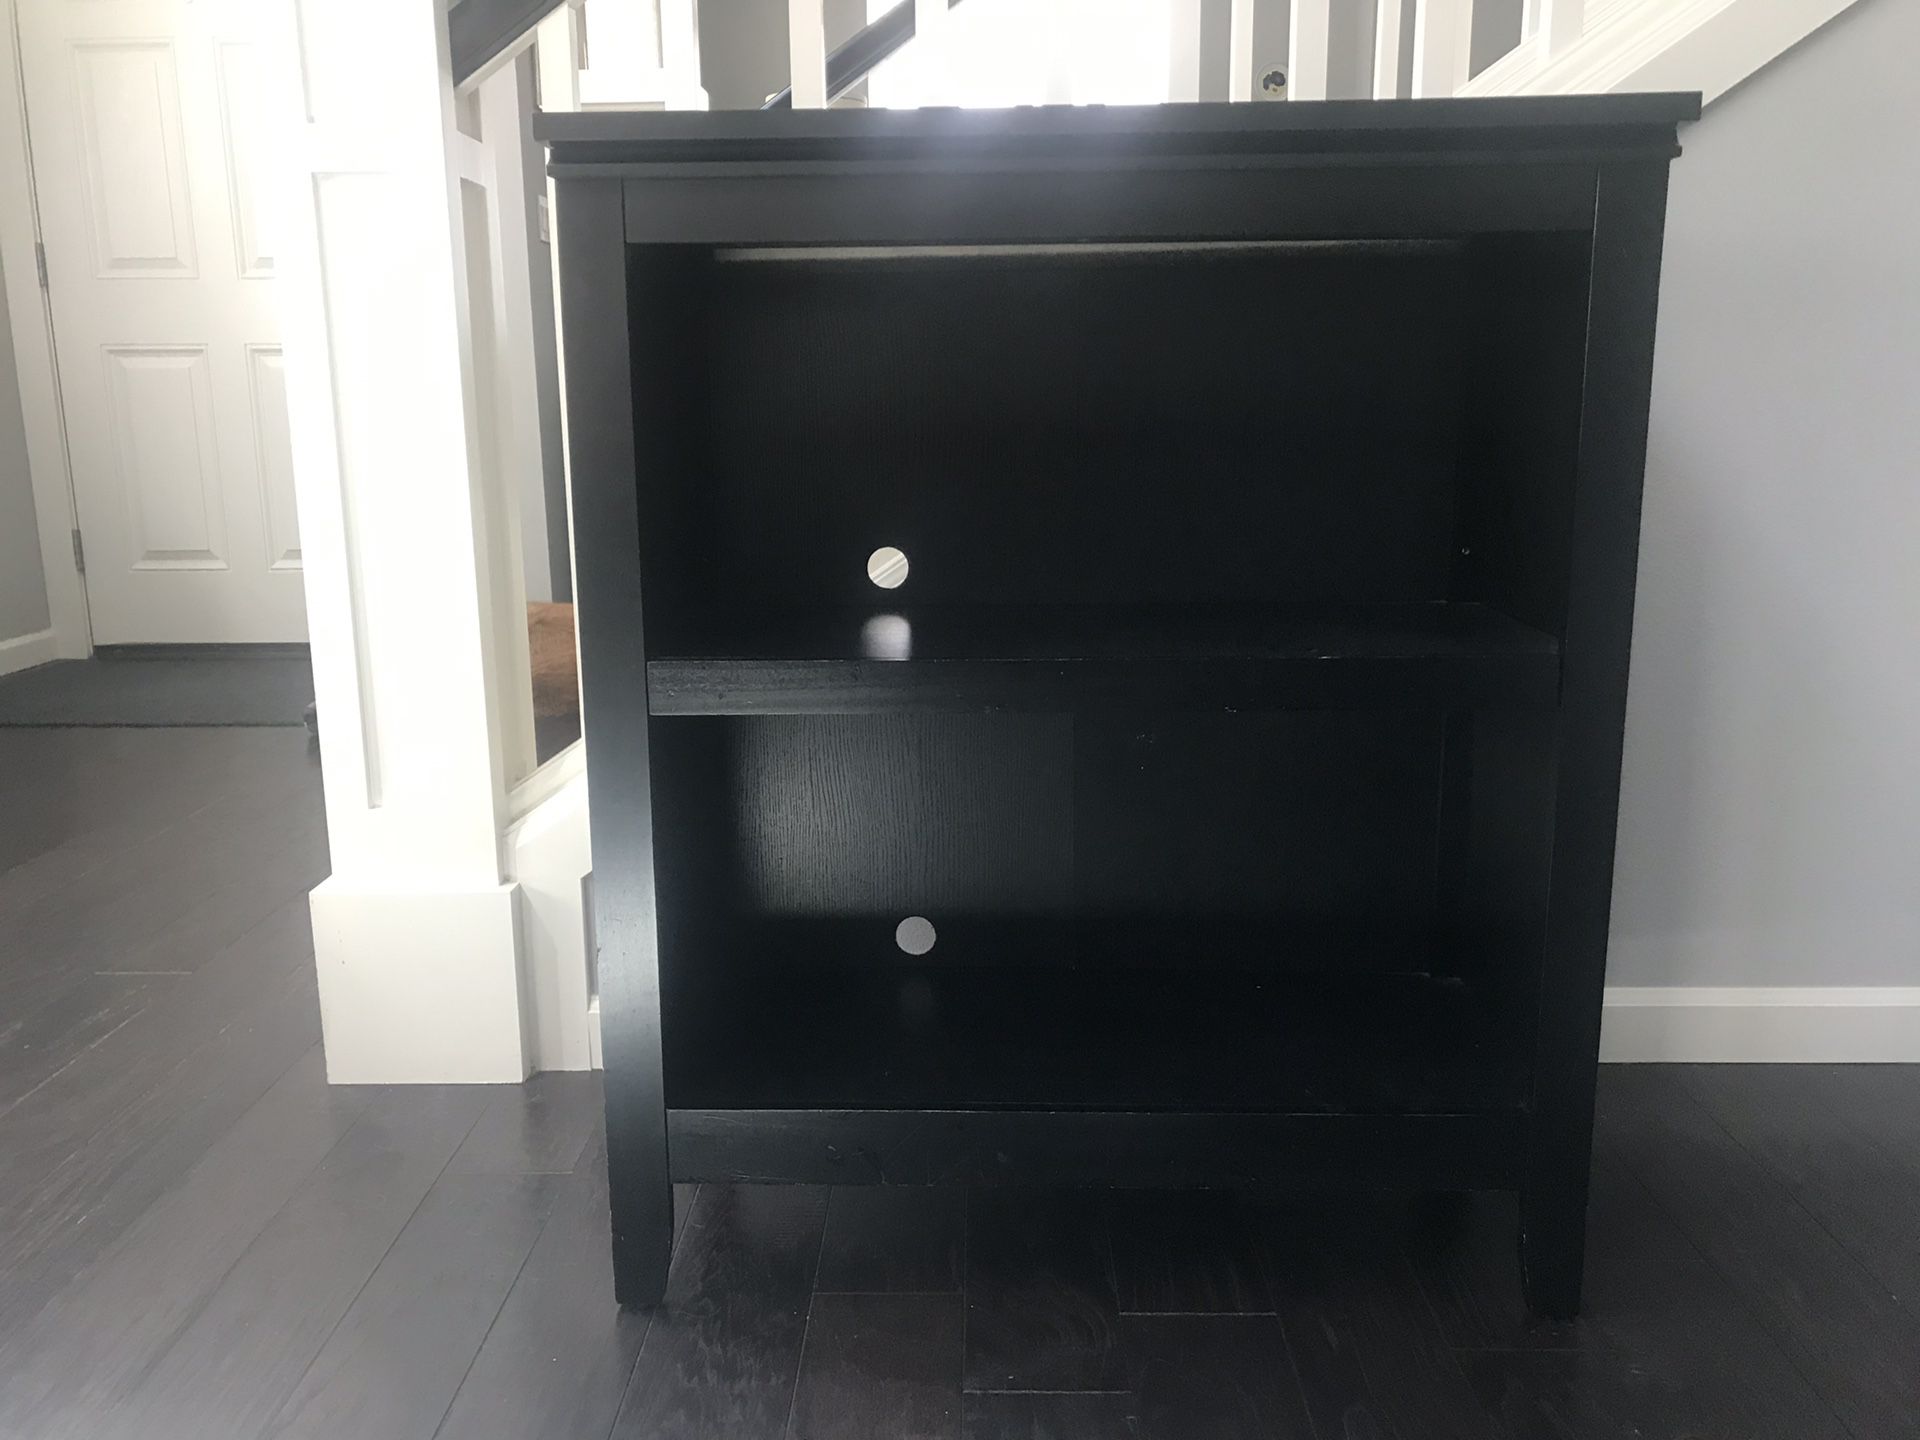 Black bookshelf or tv stand